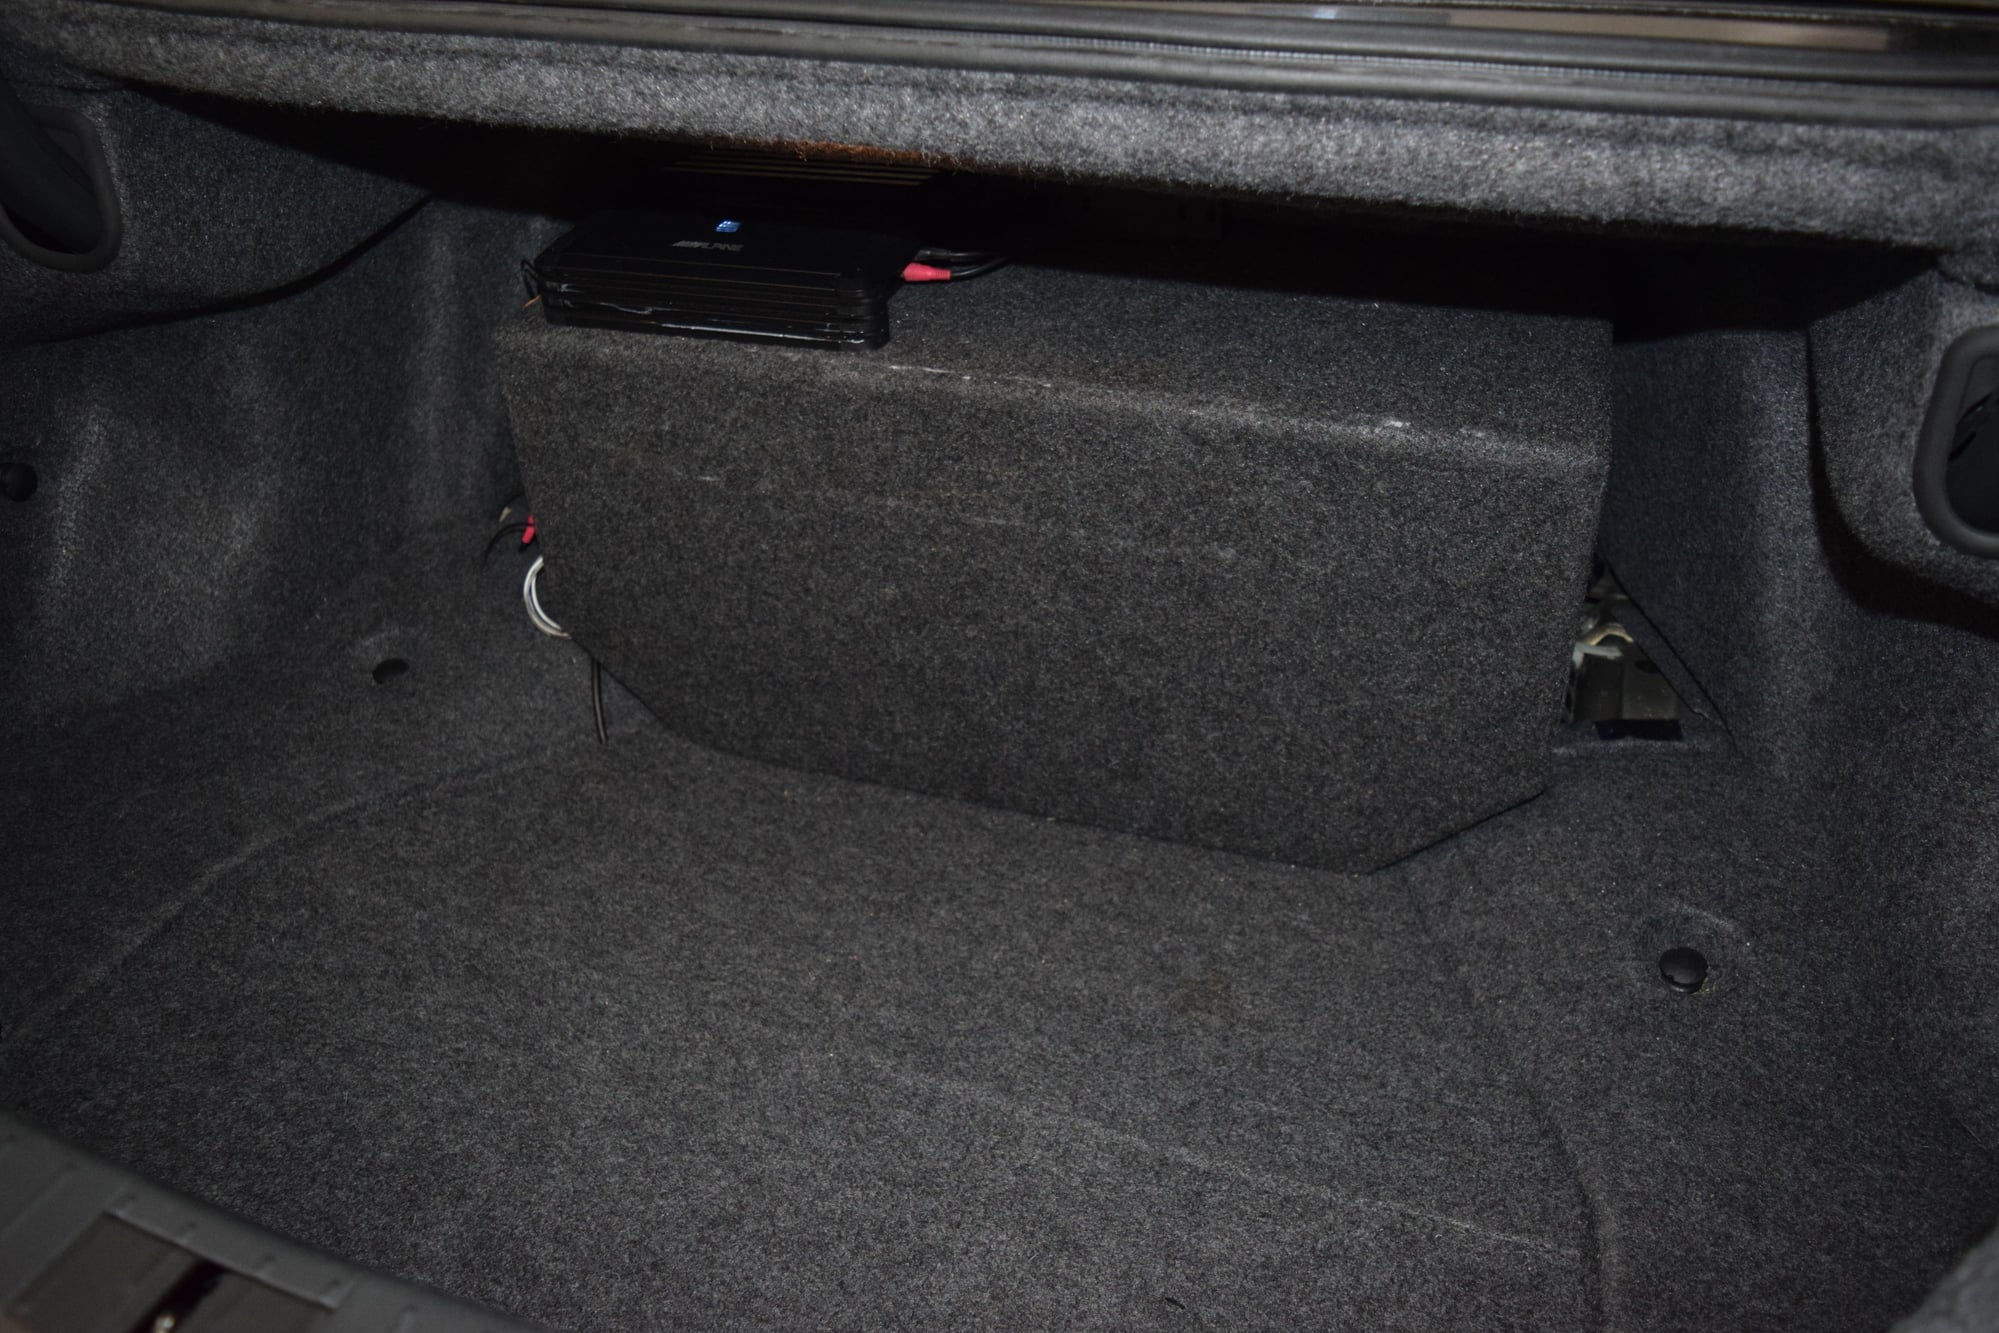 Audio Video/Electronics - FS: Custom box / sub / amp / LOC - Used - 2009 to 2014 Acura TL - Orlando, FL 32824, United States